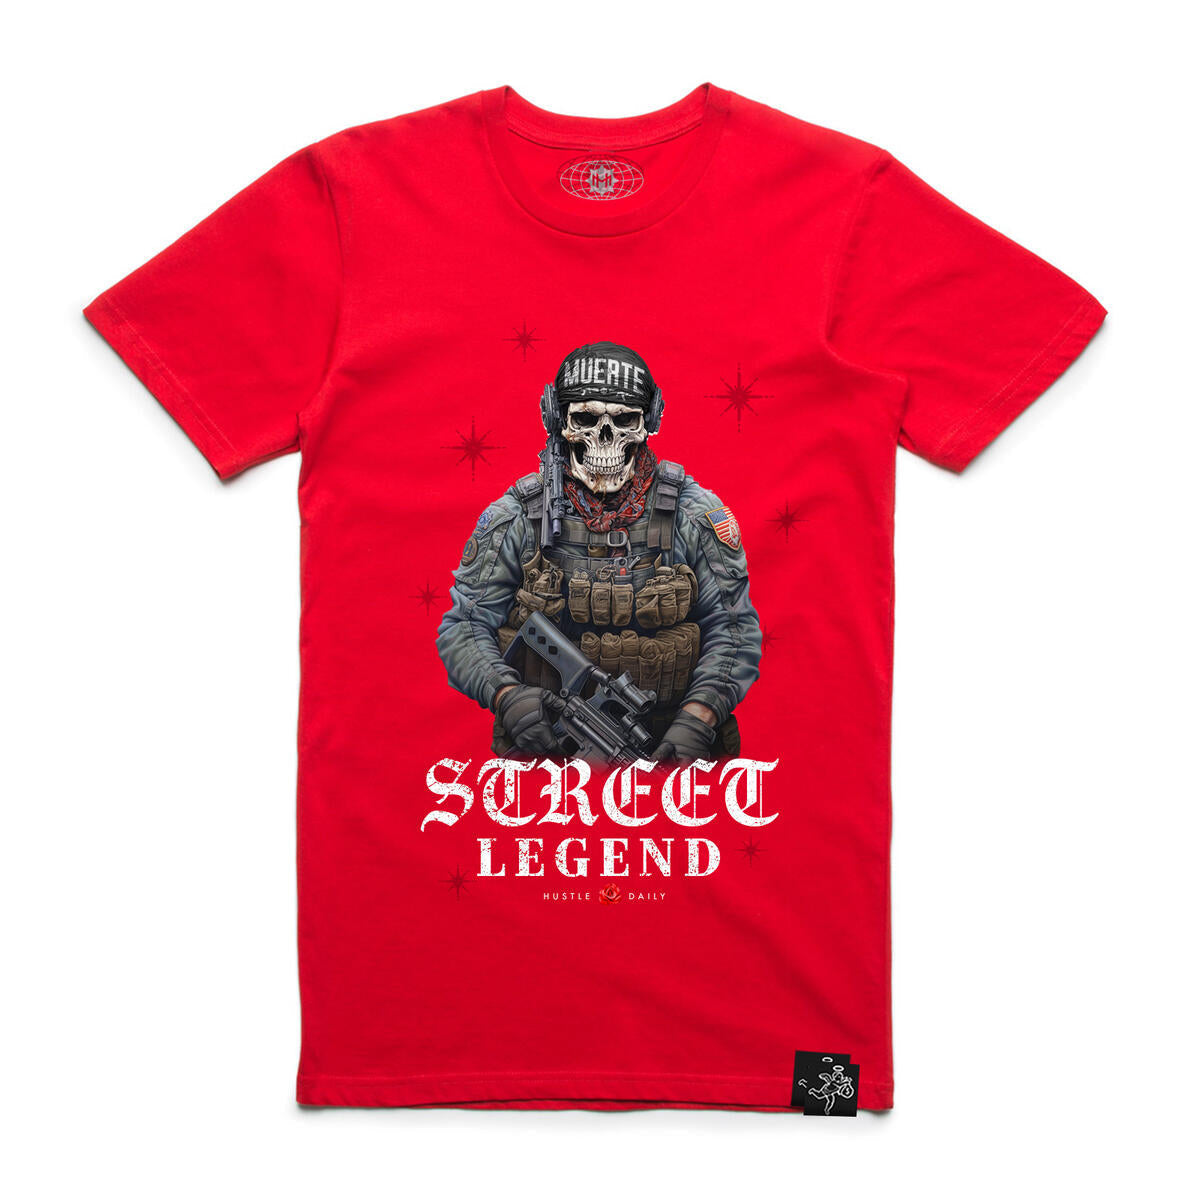 Soldier Skull Legend